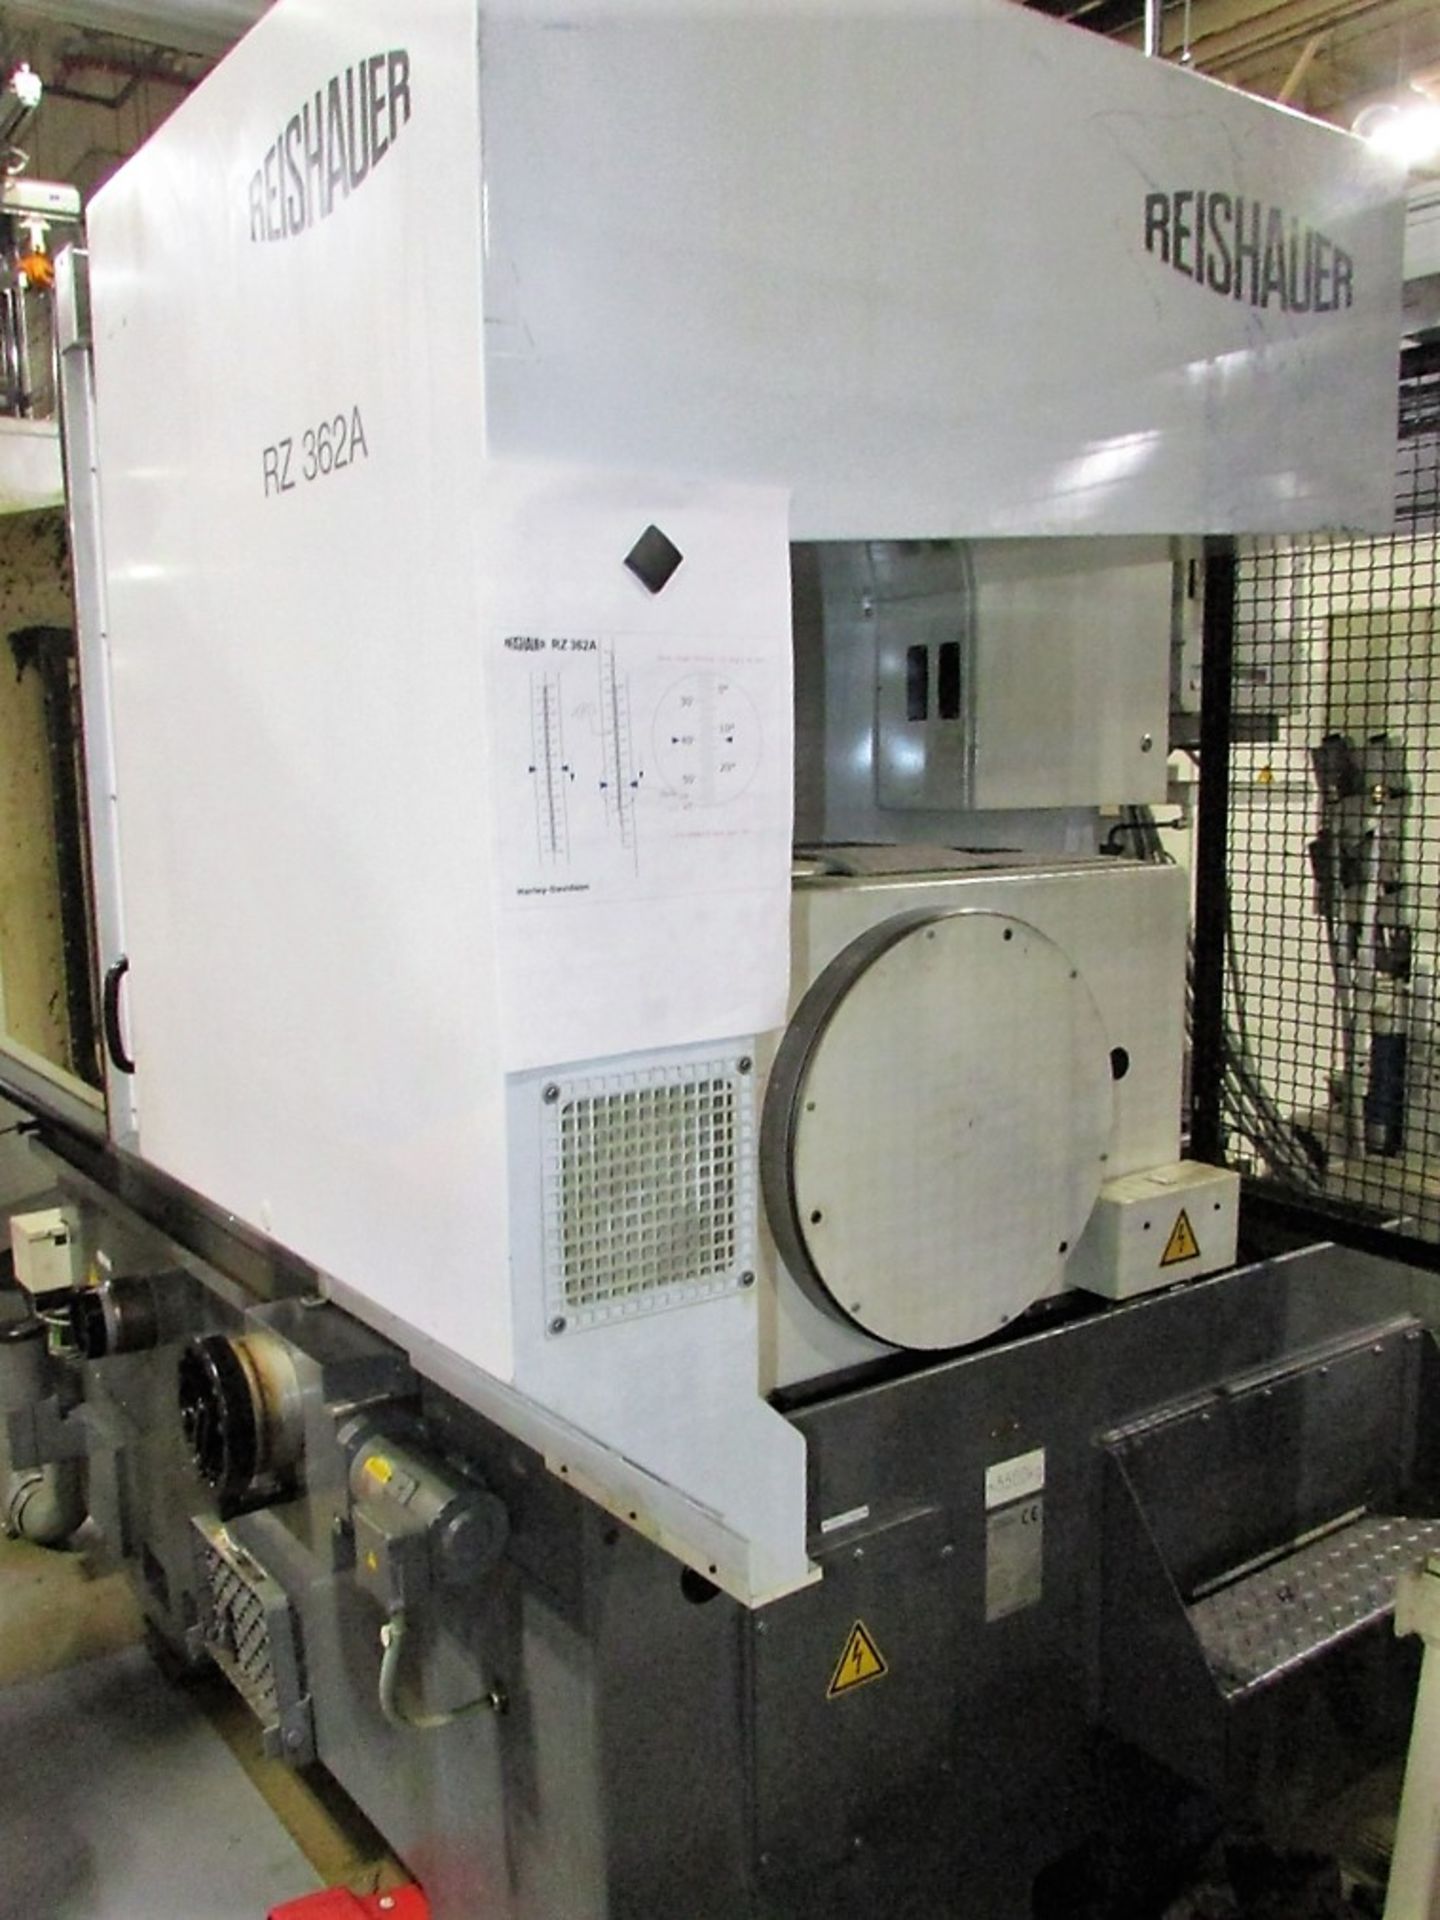 Reishauer RZ 362A CNC Gear Grinding Machine - Image 12 of 34